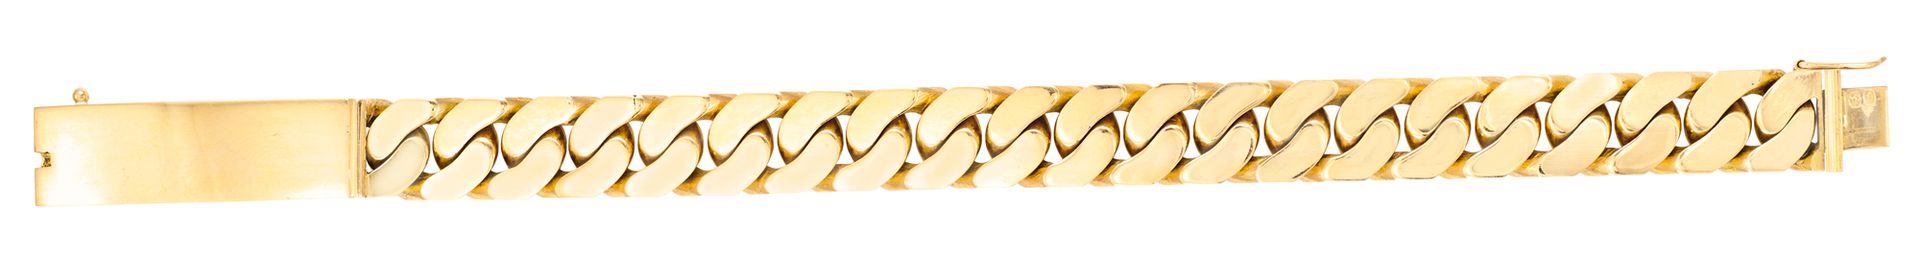 Bracelet gourmette 纯金
长：22 厘米 - 宽：1.2 厘米 
重量：129.50 克（18K-750/1000）